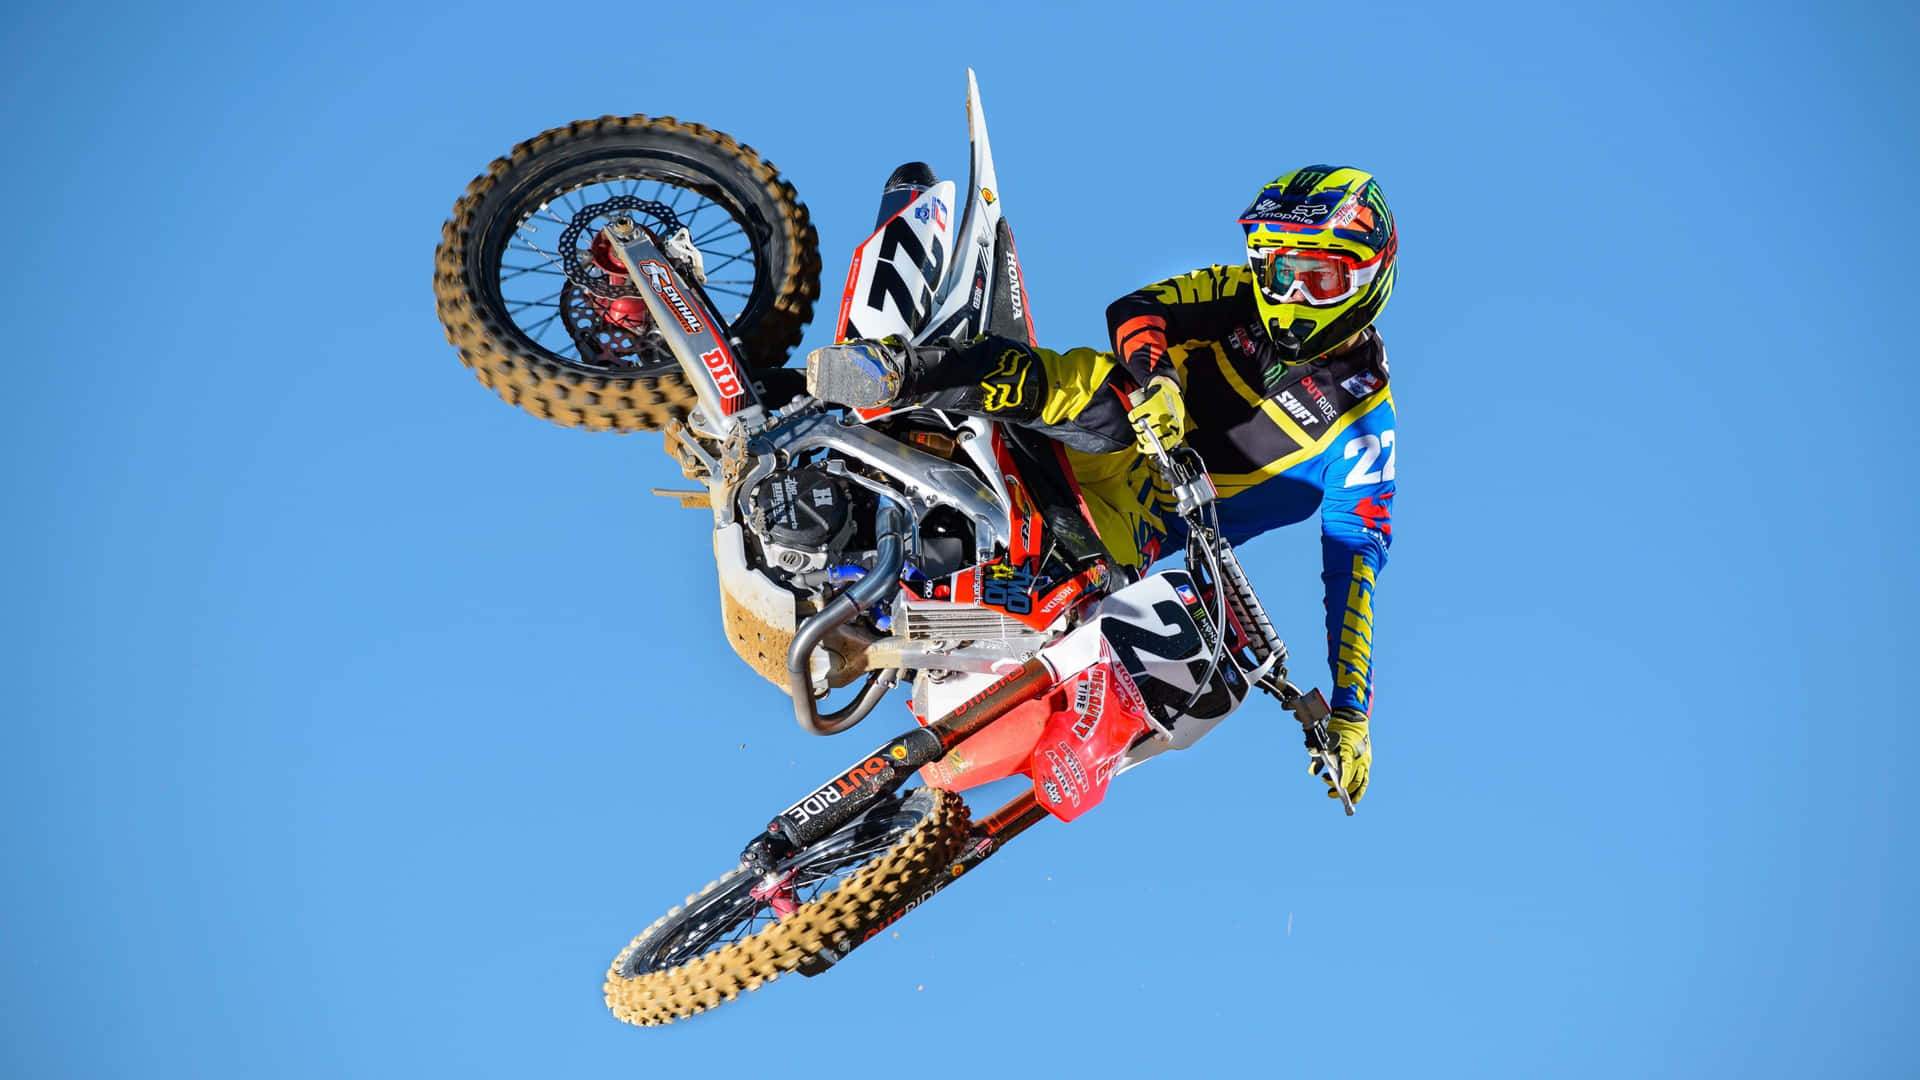 Motocross rider soaring through the sky